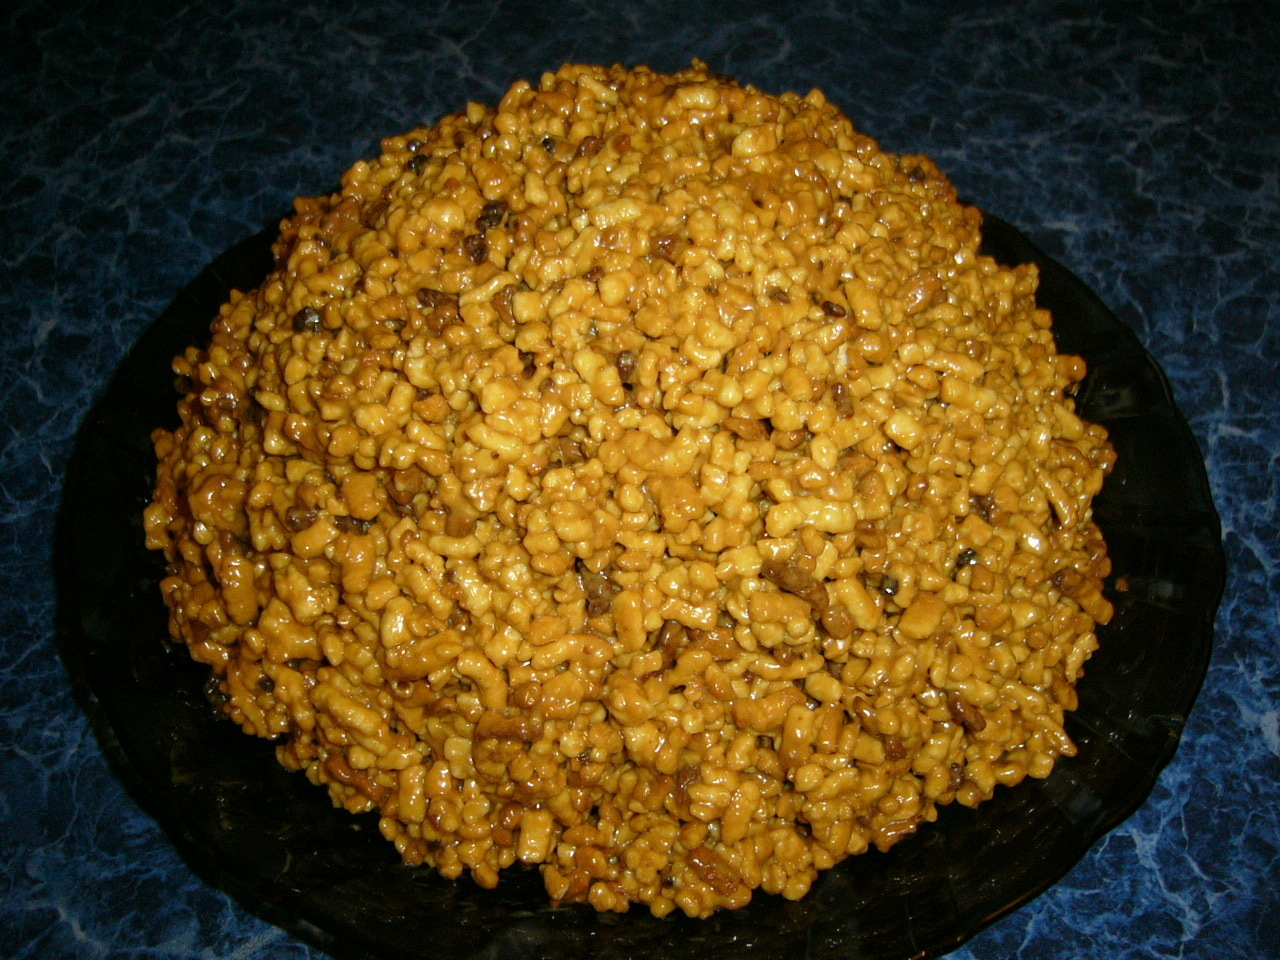 Торт муравейник рецепт с фото пошагово в домашних условиях фото